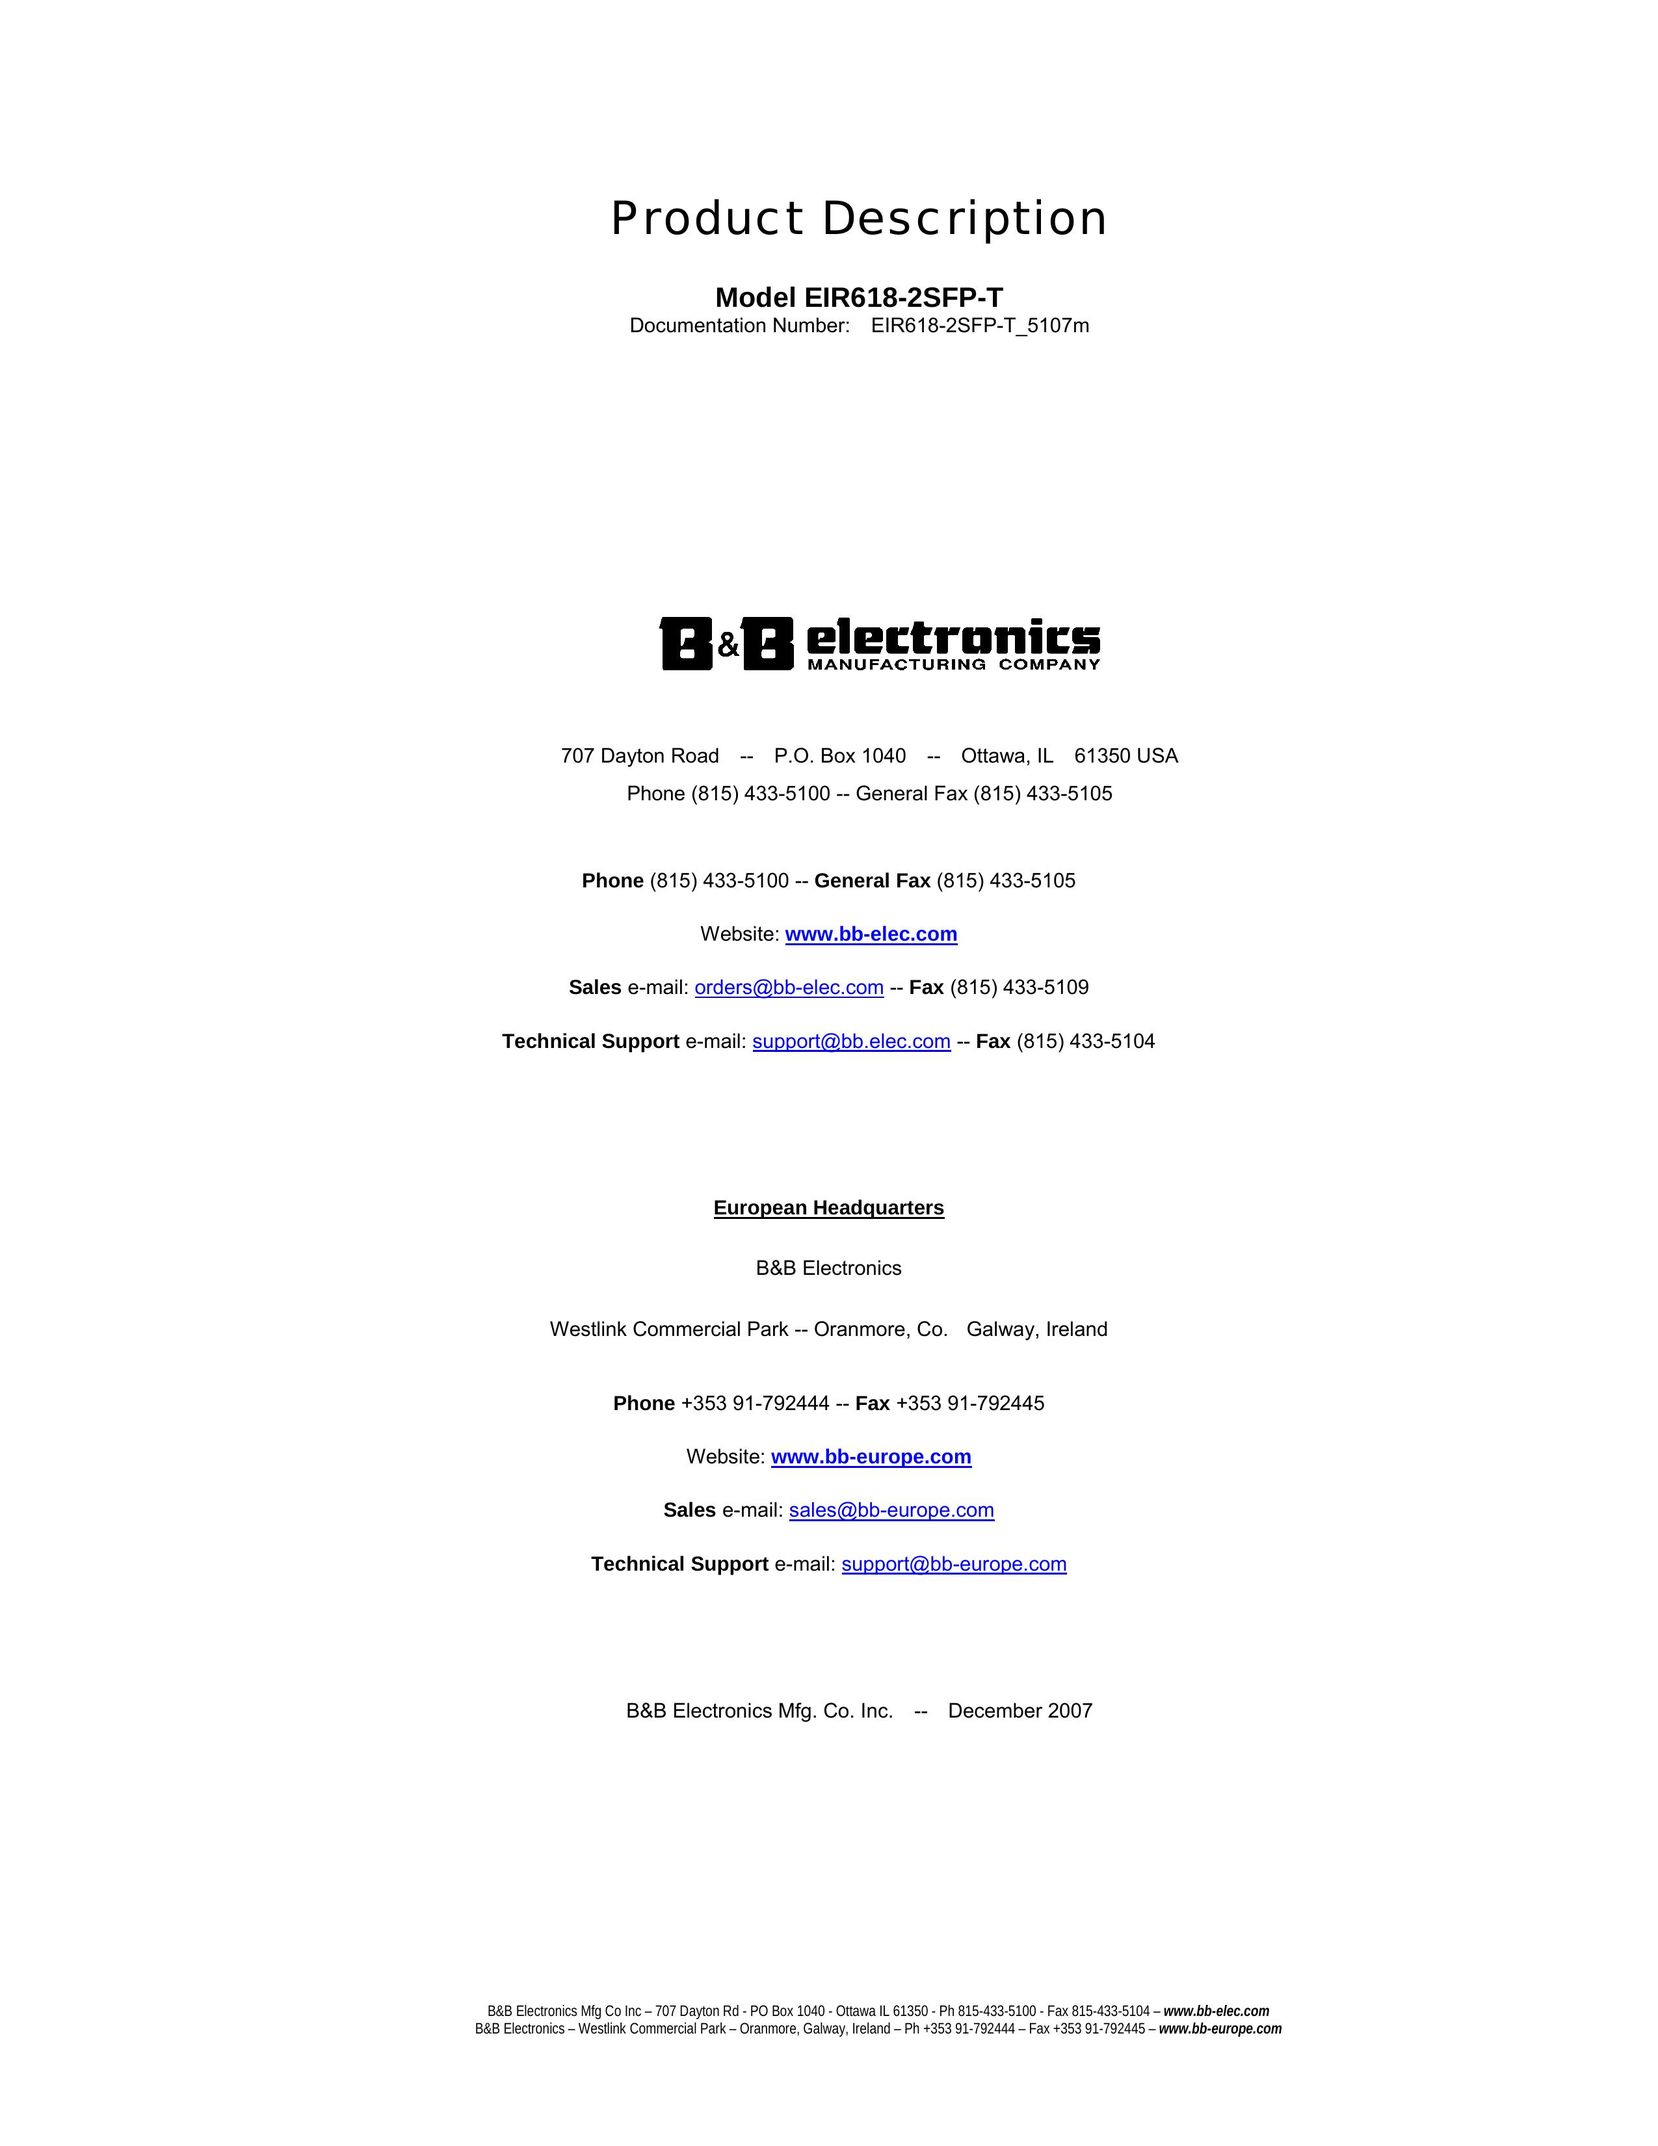 B&B Electronics EIR618-2SFP-T Computer Drive User Manual